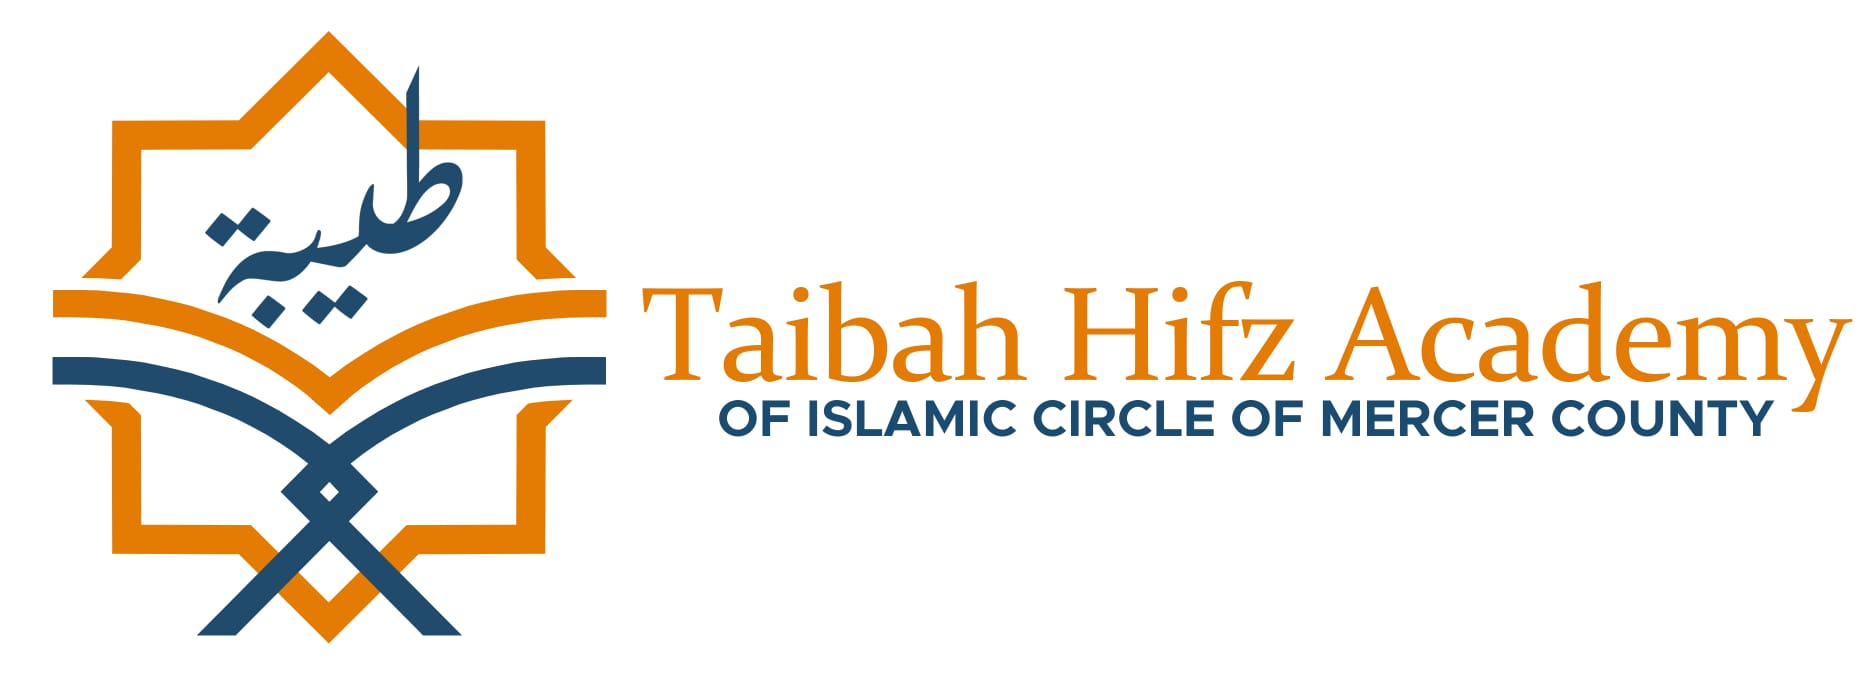 Welcome to Taibah Hifz Academy